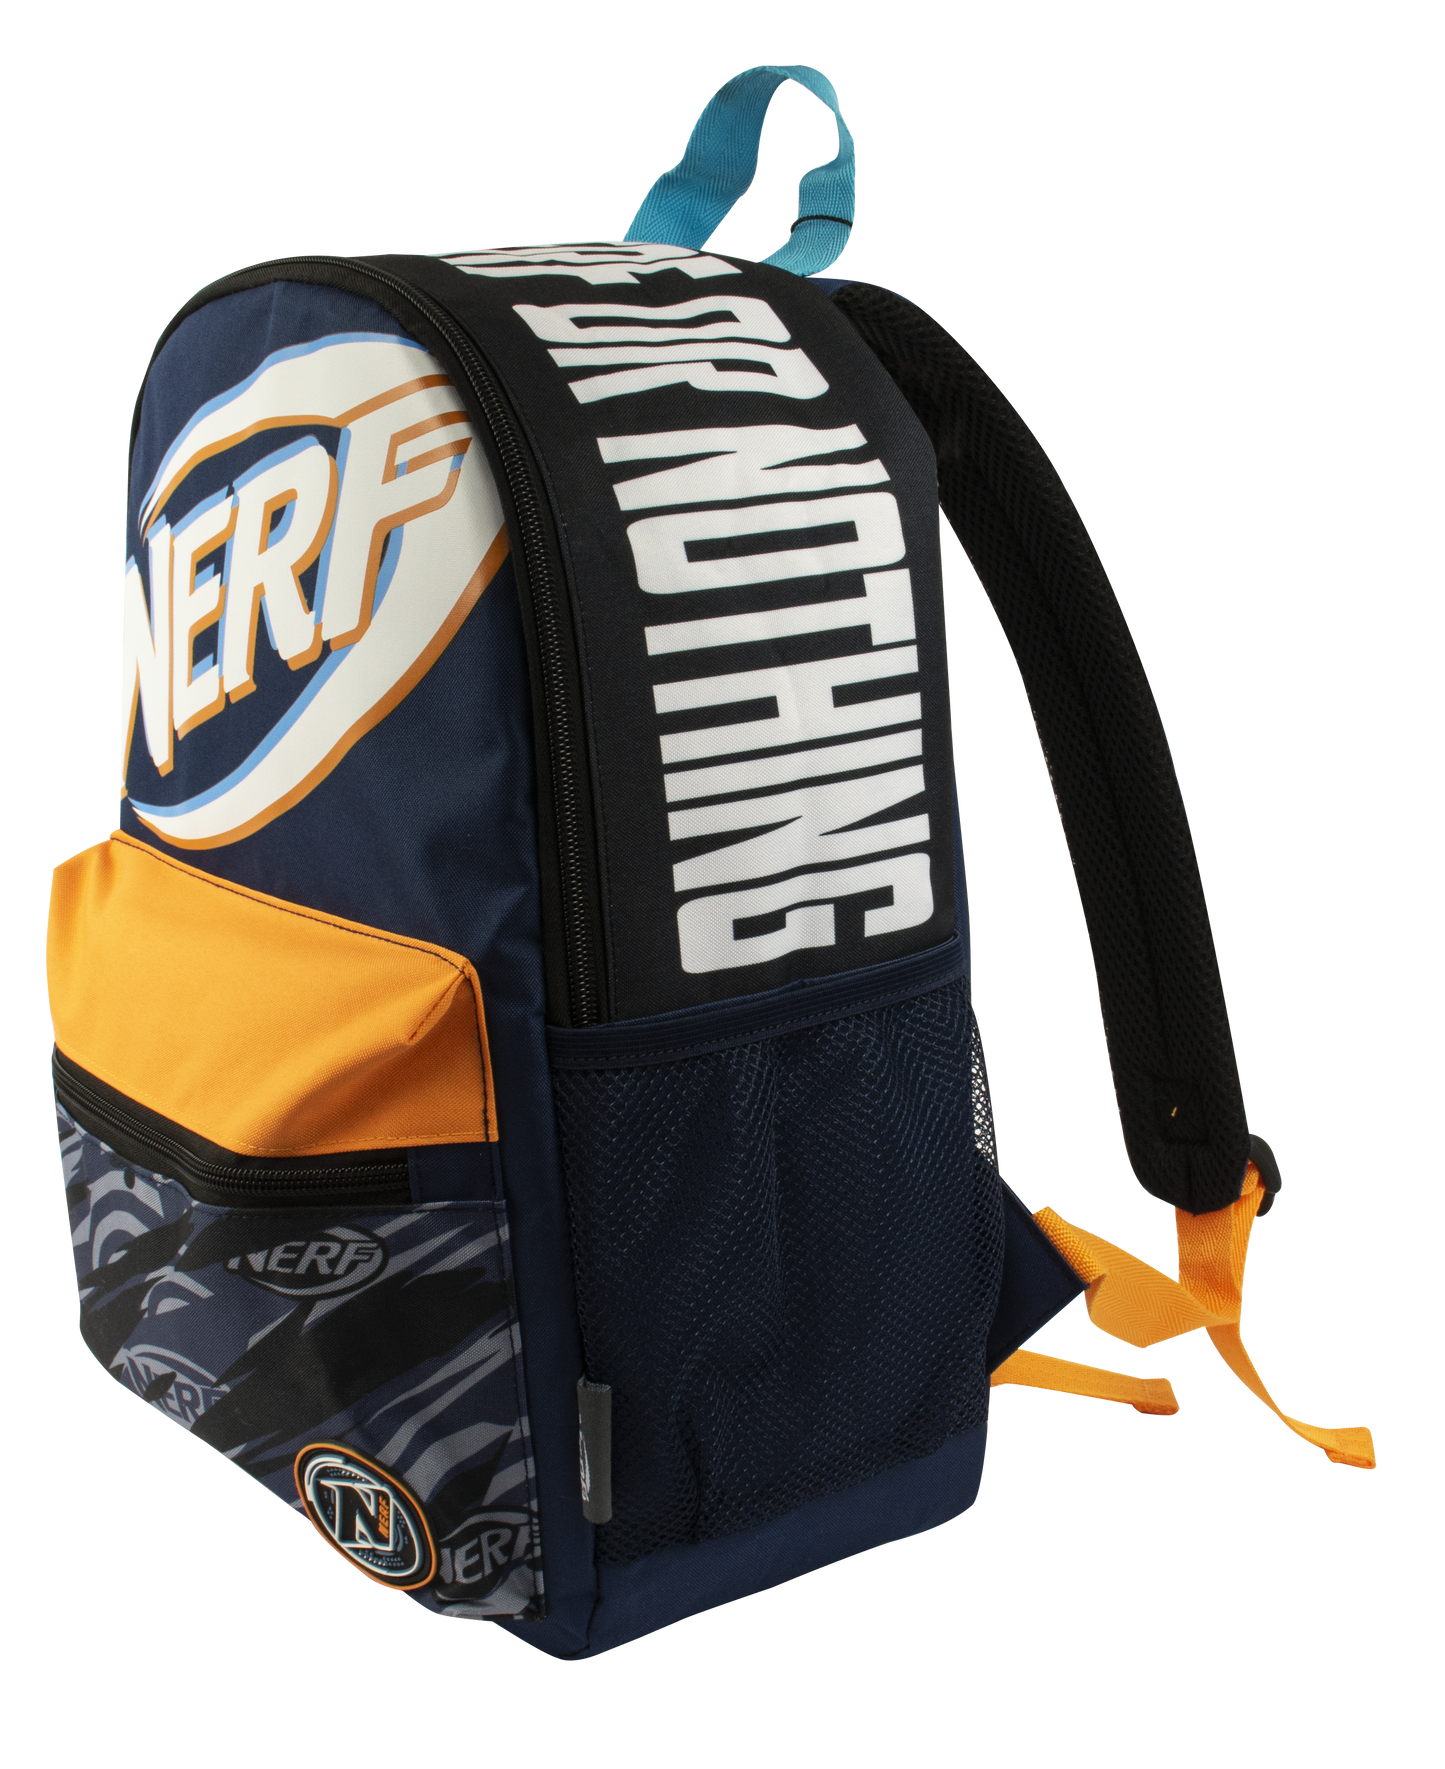 Nerf Backpack - Tech Camo